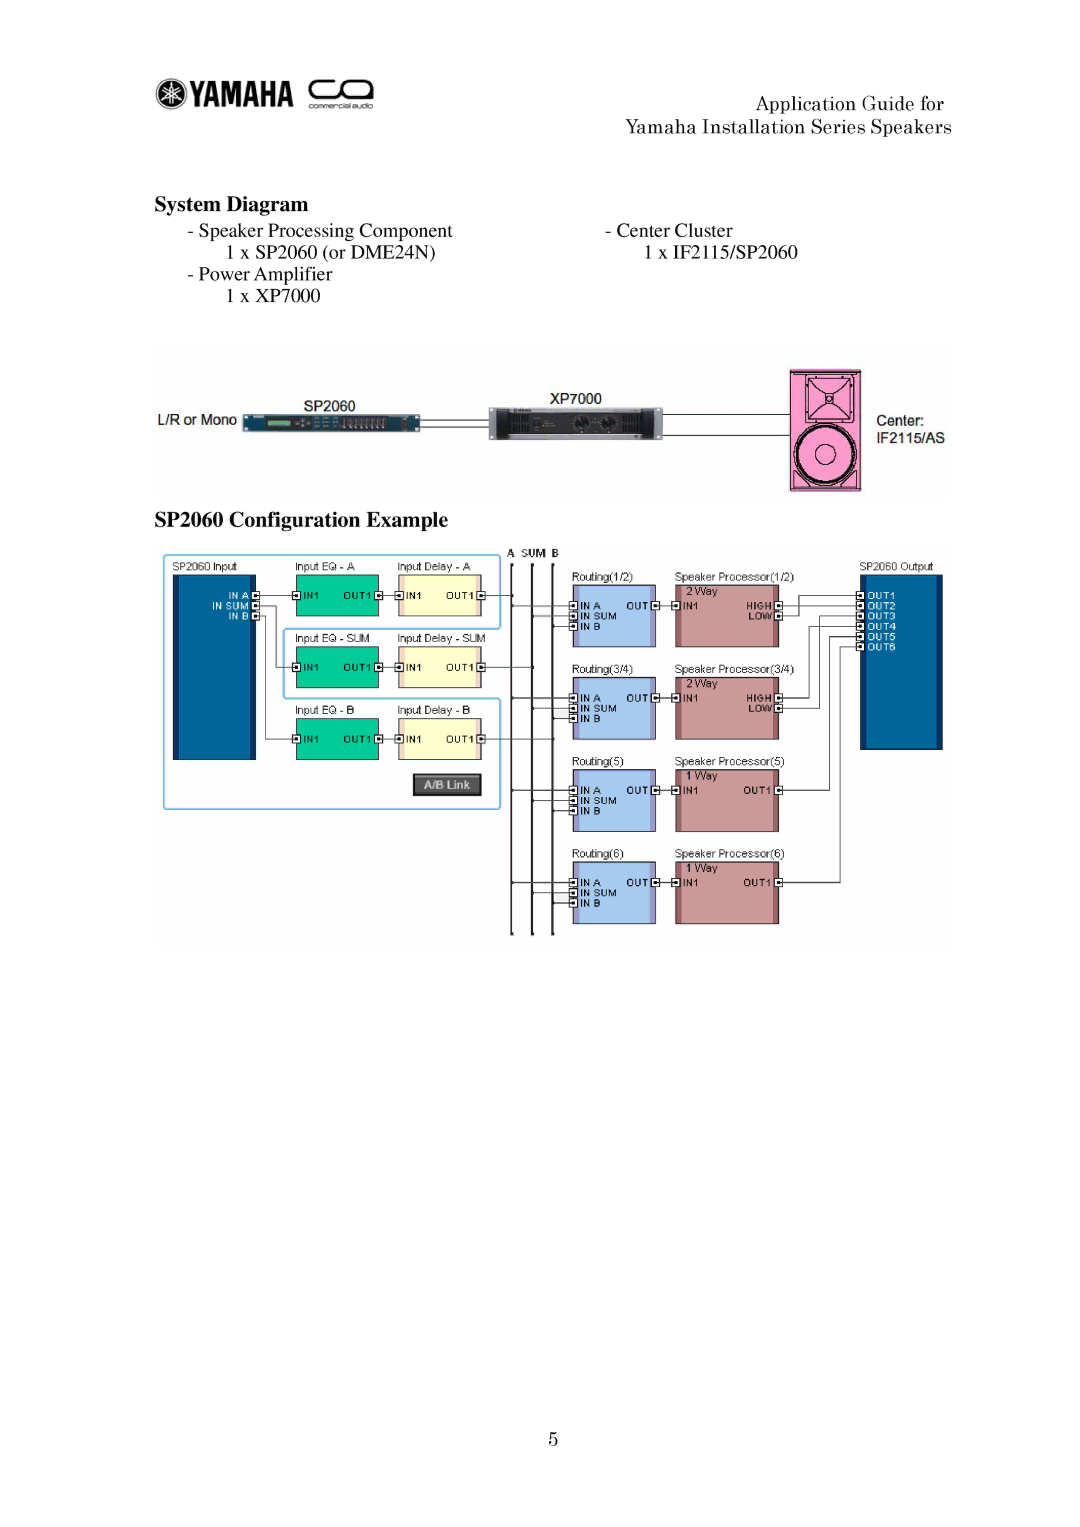 Yamaha IF2112 manual System Diagram, SP2060 Configuration Example 